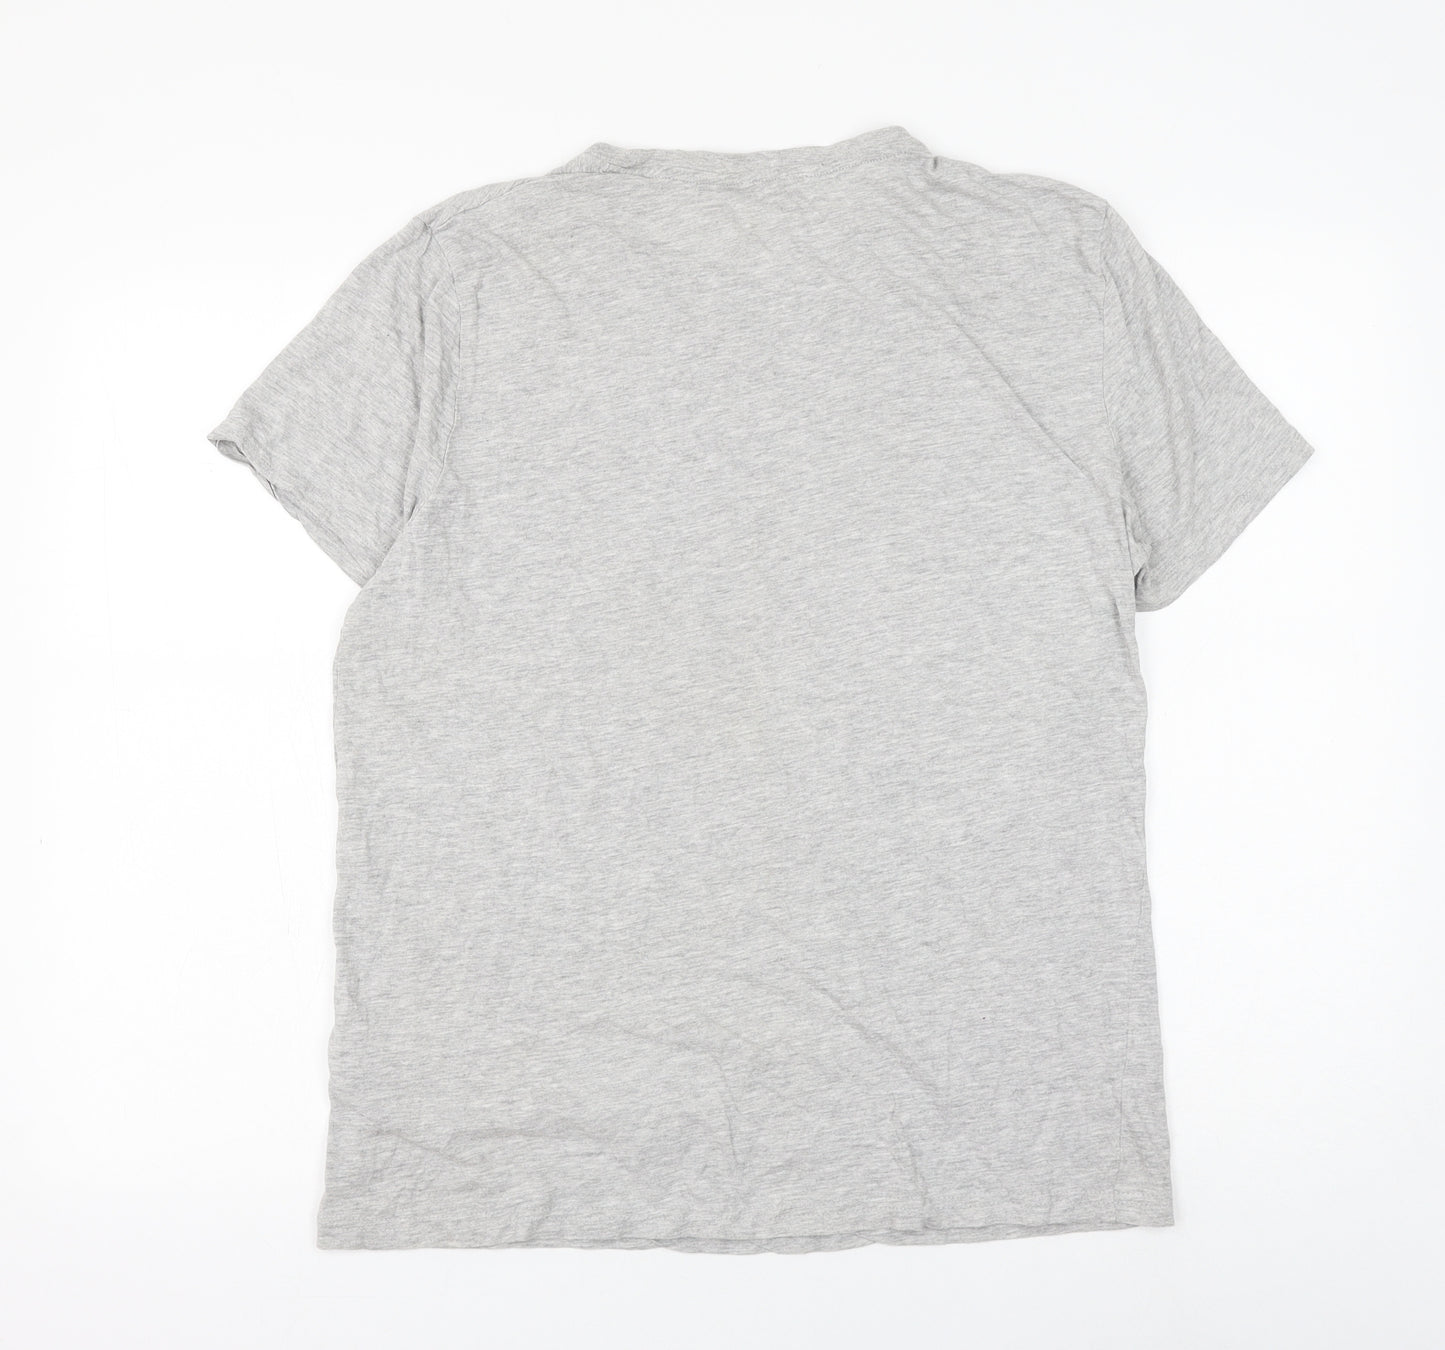 PEP&CO Mens Grey Cotton T-Shirt Size L Round Neck - Legacy